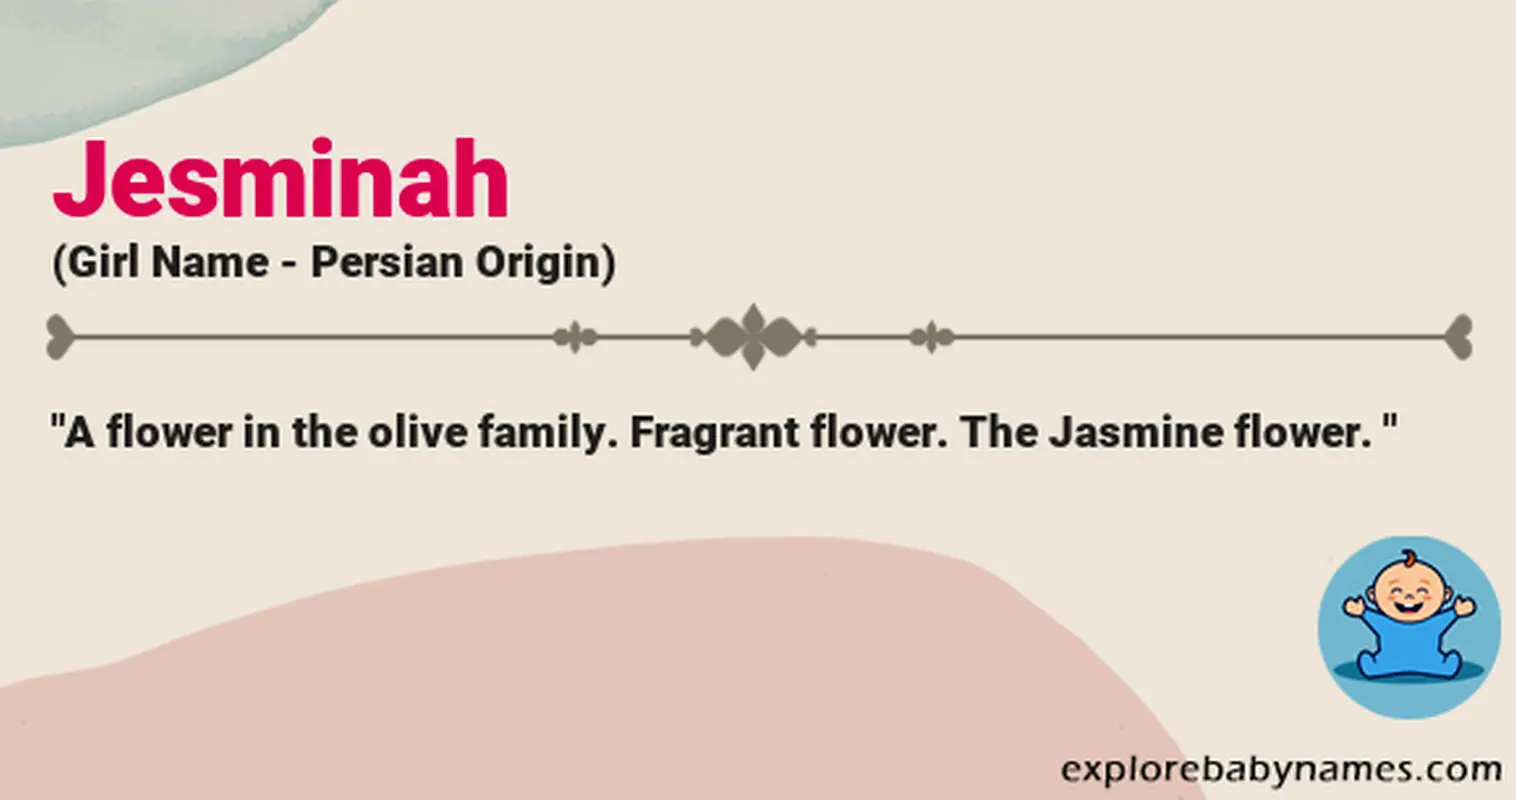 Meaning of Jesminah